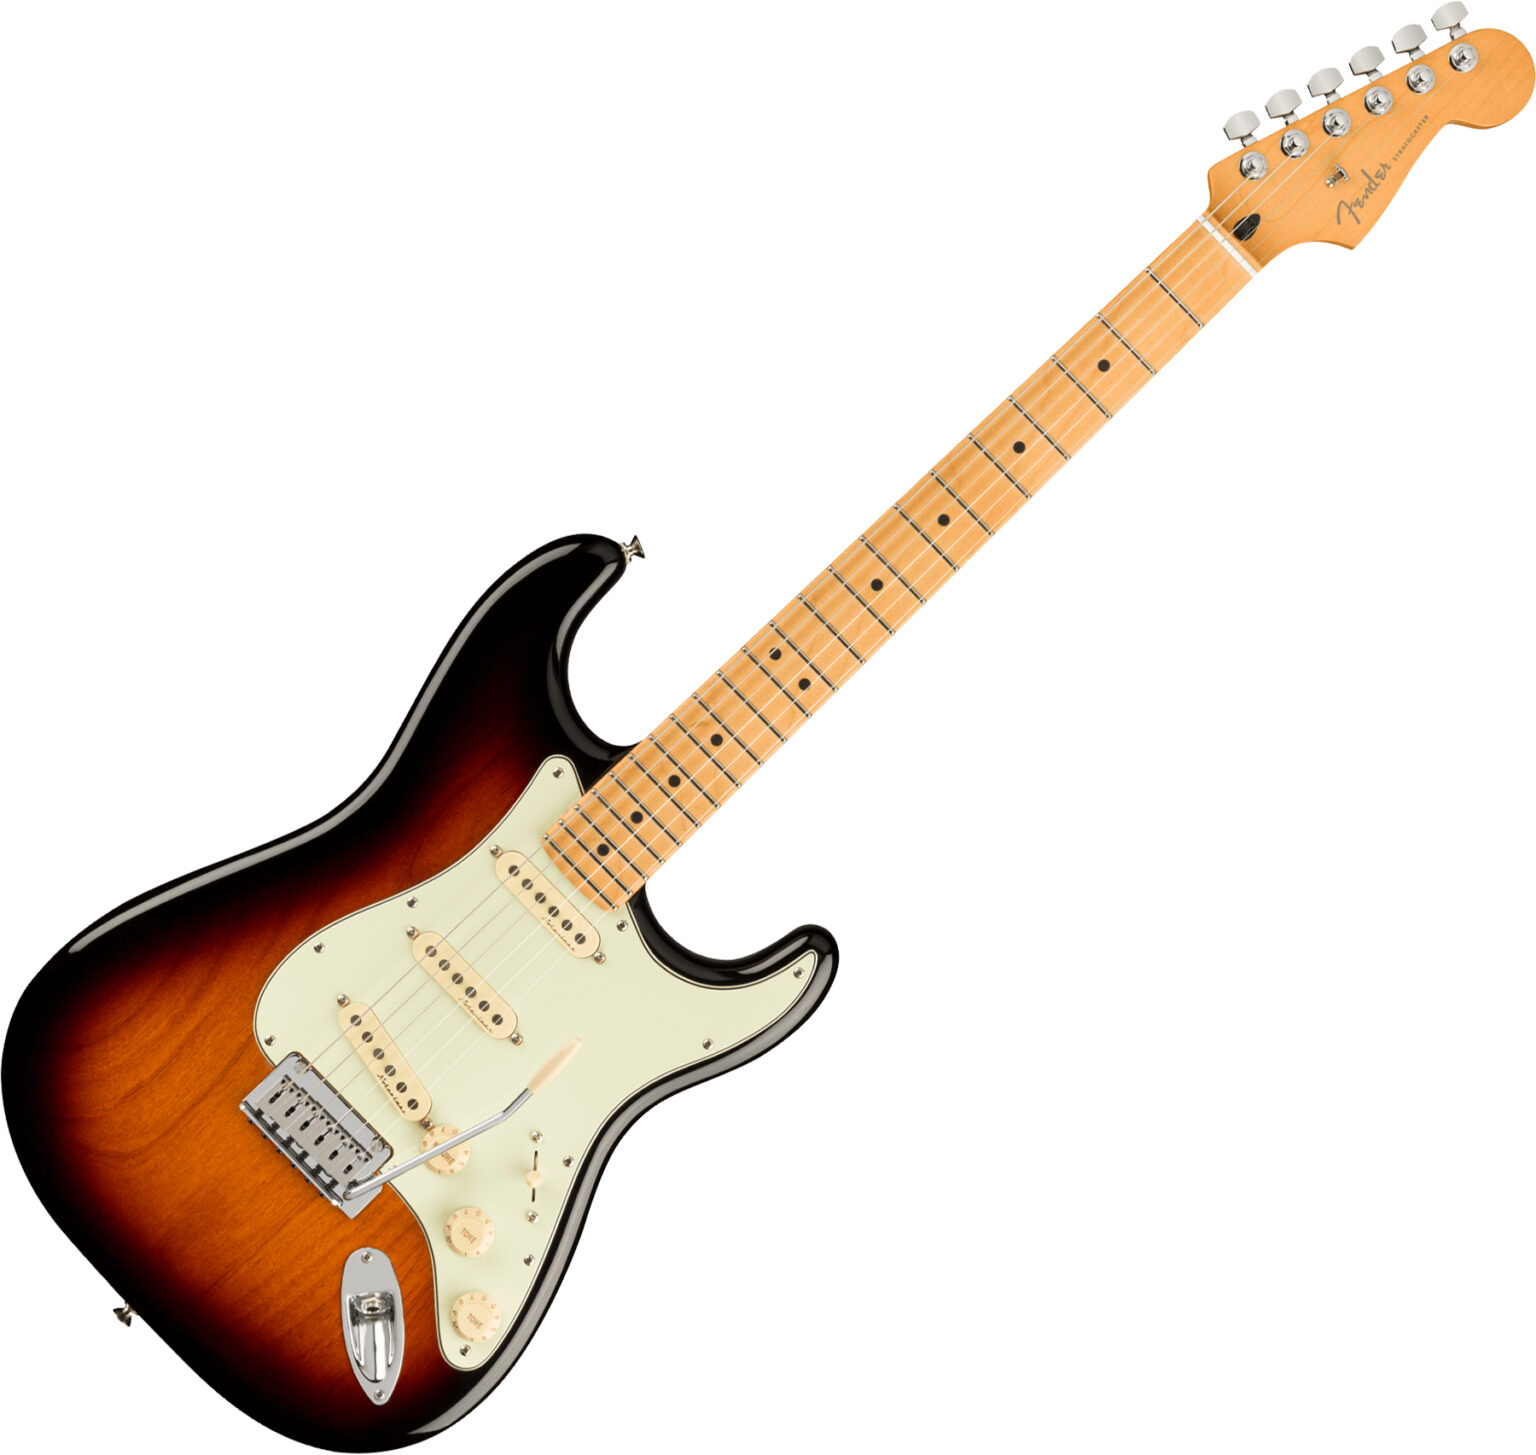 Электрогитара rockdale stars. Squier Classic Vibe 50s Stratocaster. Cort g100 OPB. Электрогитара Cort g110 BK. Гитара Rockdale Stratocaster.